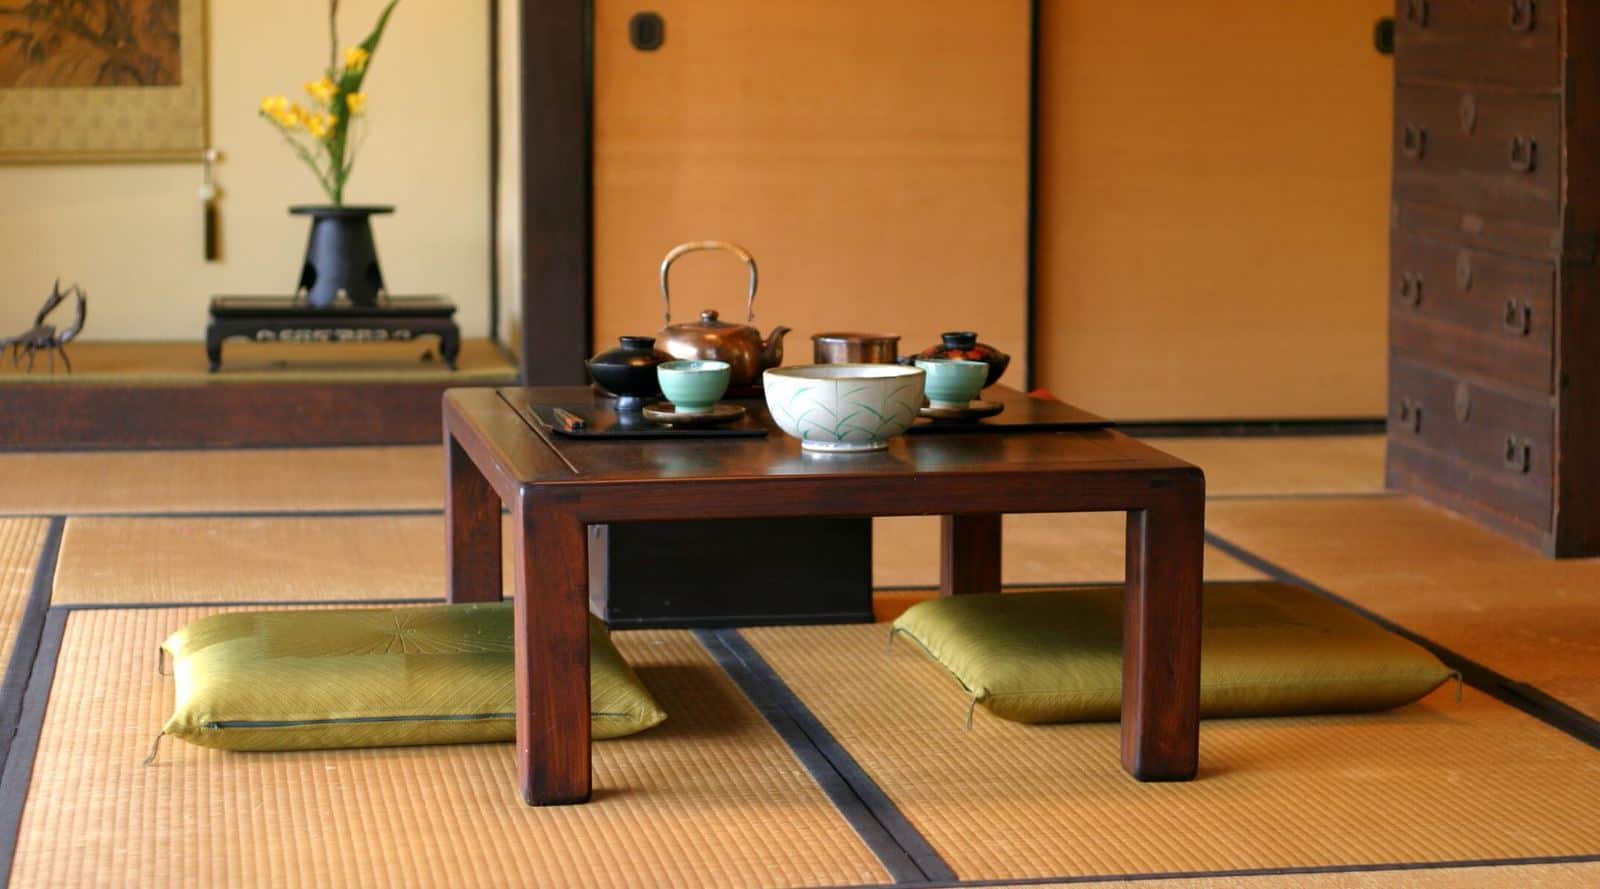 japanese tea ceremony utensils and equipment